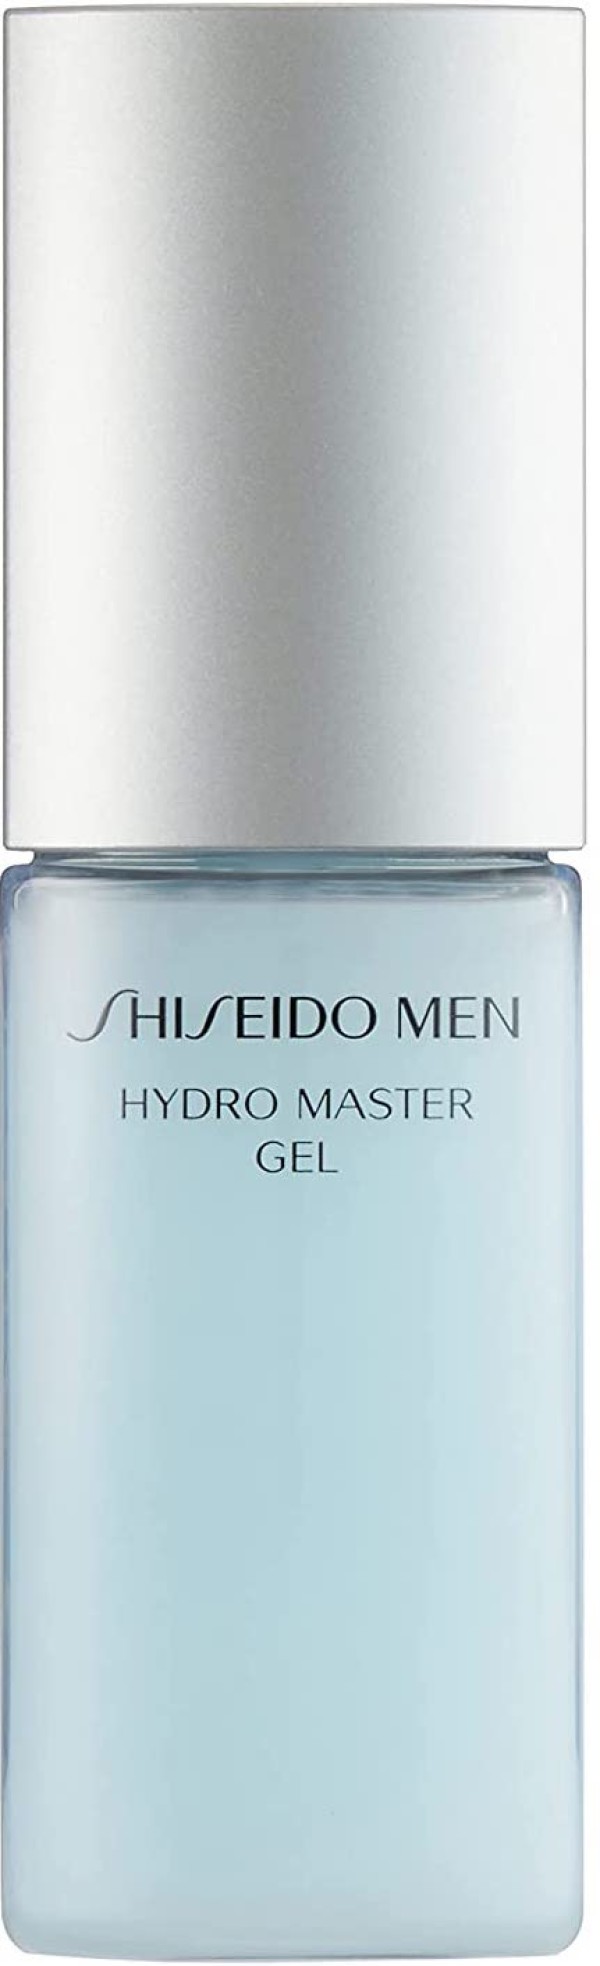 Увлажняющий мужской гель Shiseido Men Hydro Master Gel